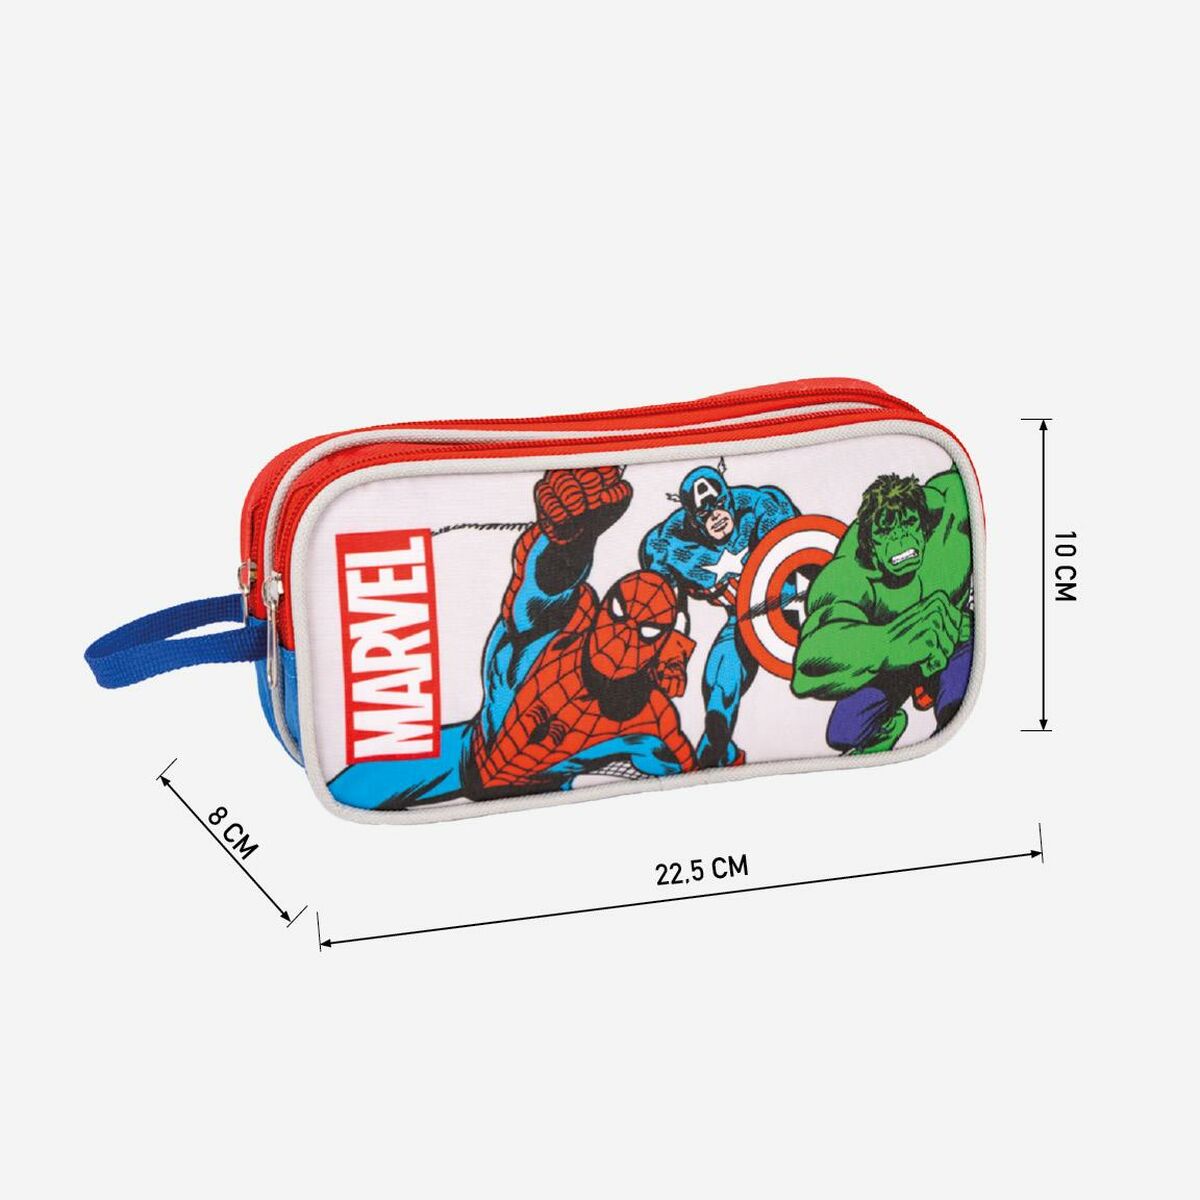 Zweifaches Mehrzweck-Etui The Avengers 22,5 x 8 x 10 cm Rot